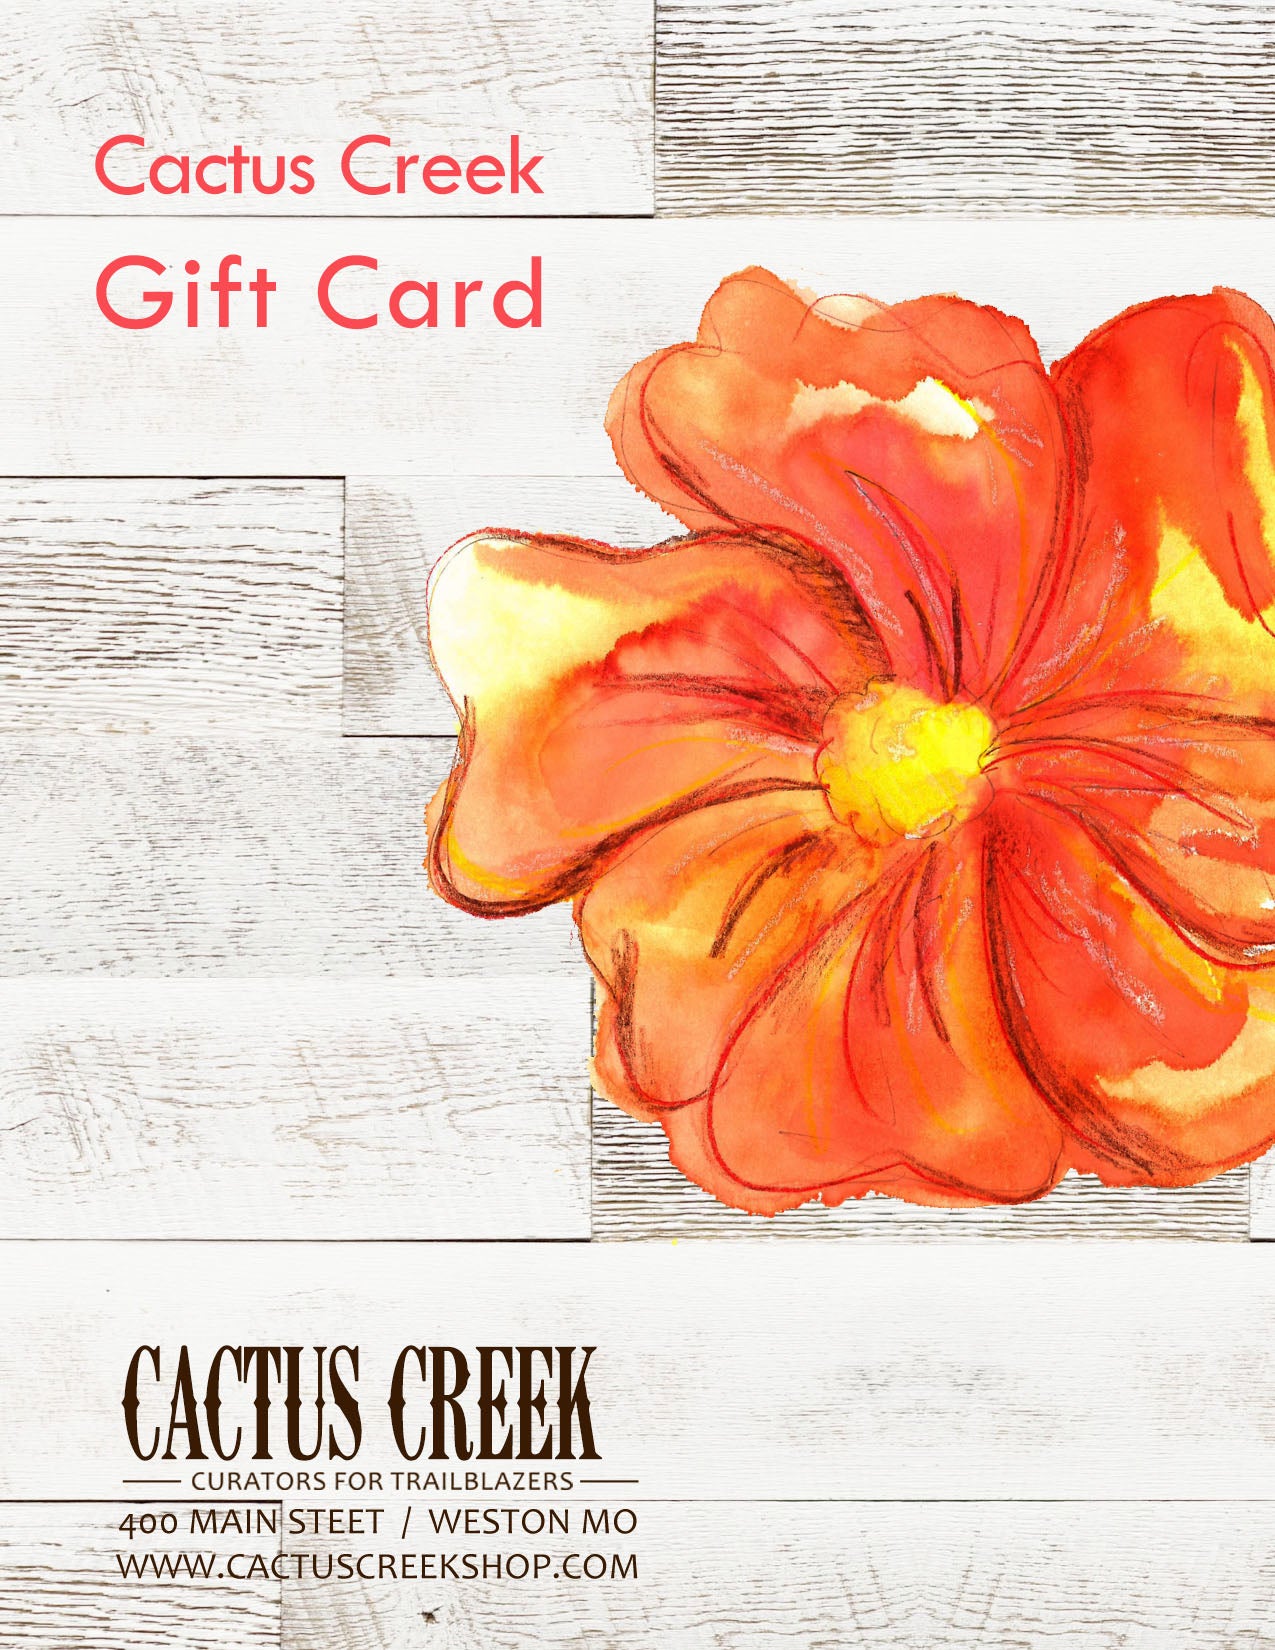 $100 Cactus Creek Gift Card